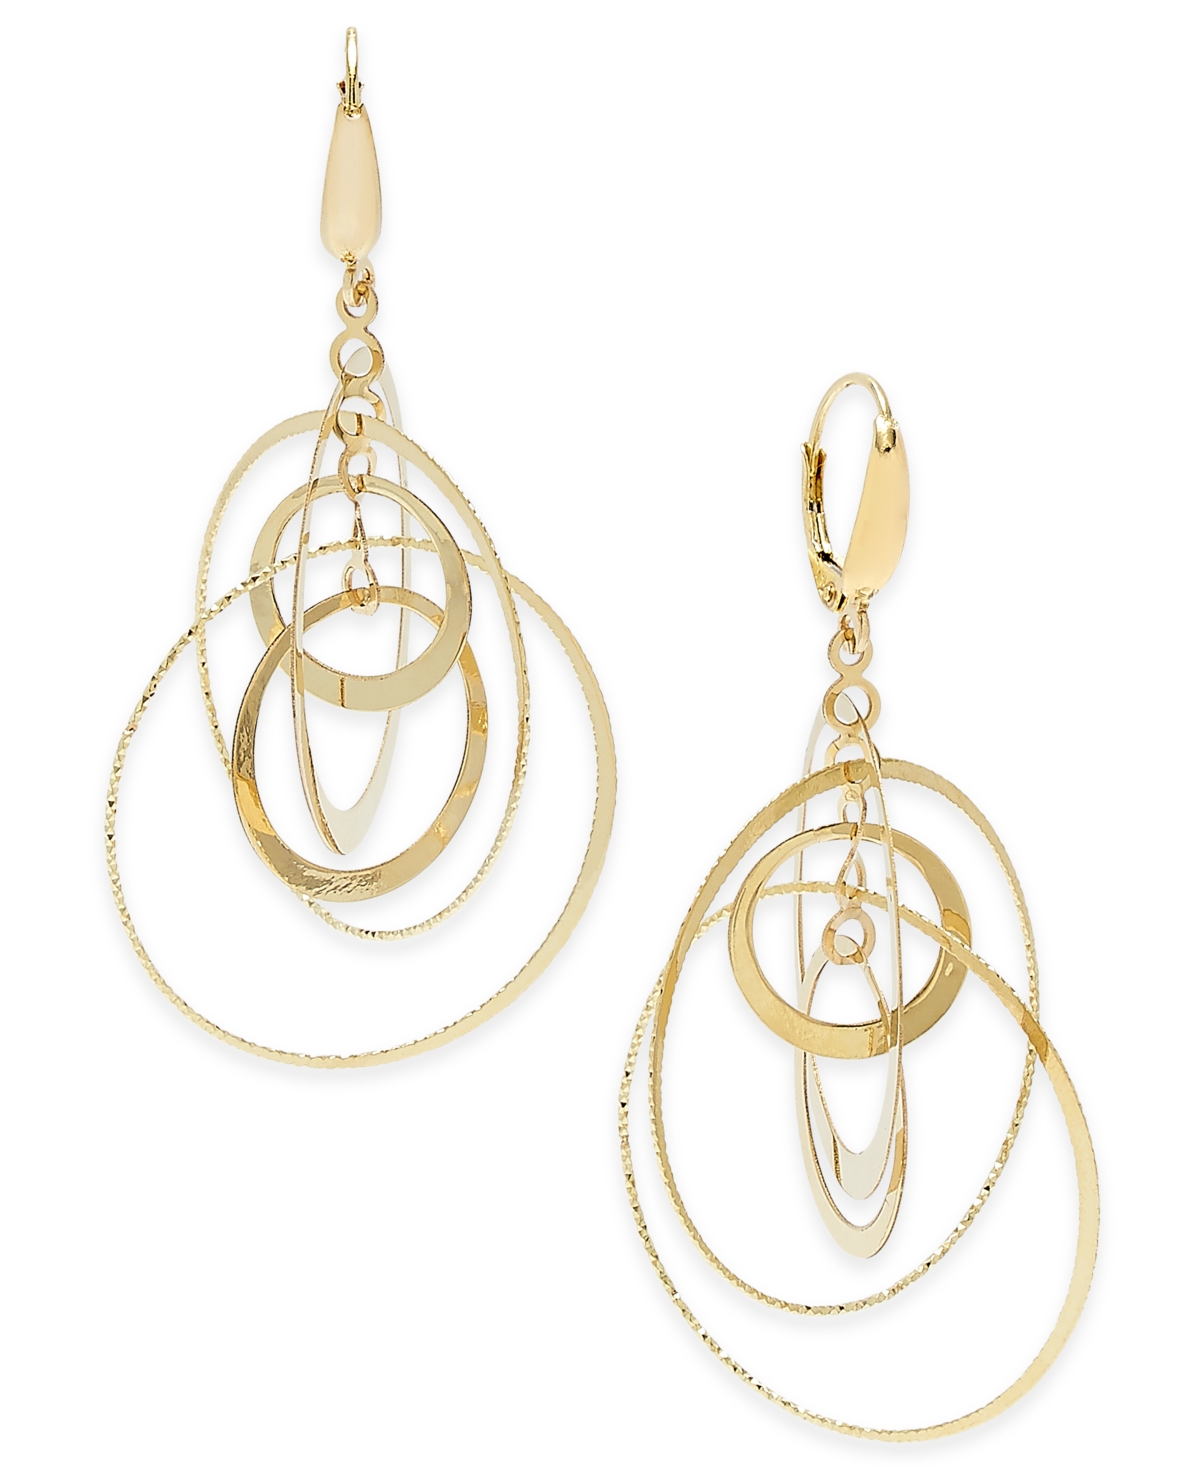 Multi-Circle Orbital Drop Earrings in 14k Gold - Yellow Gold